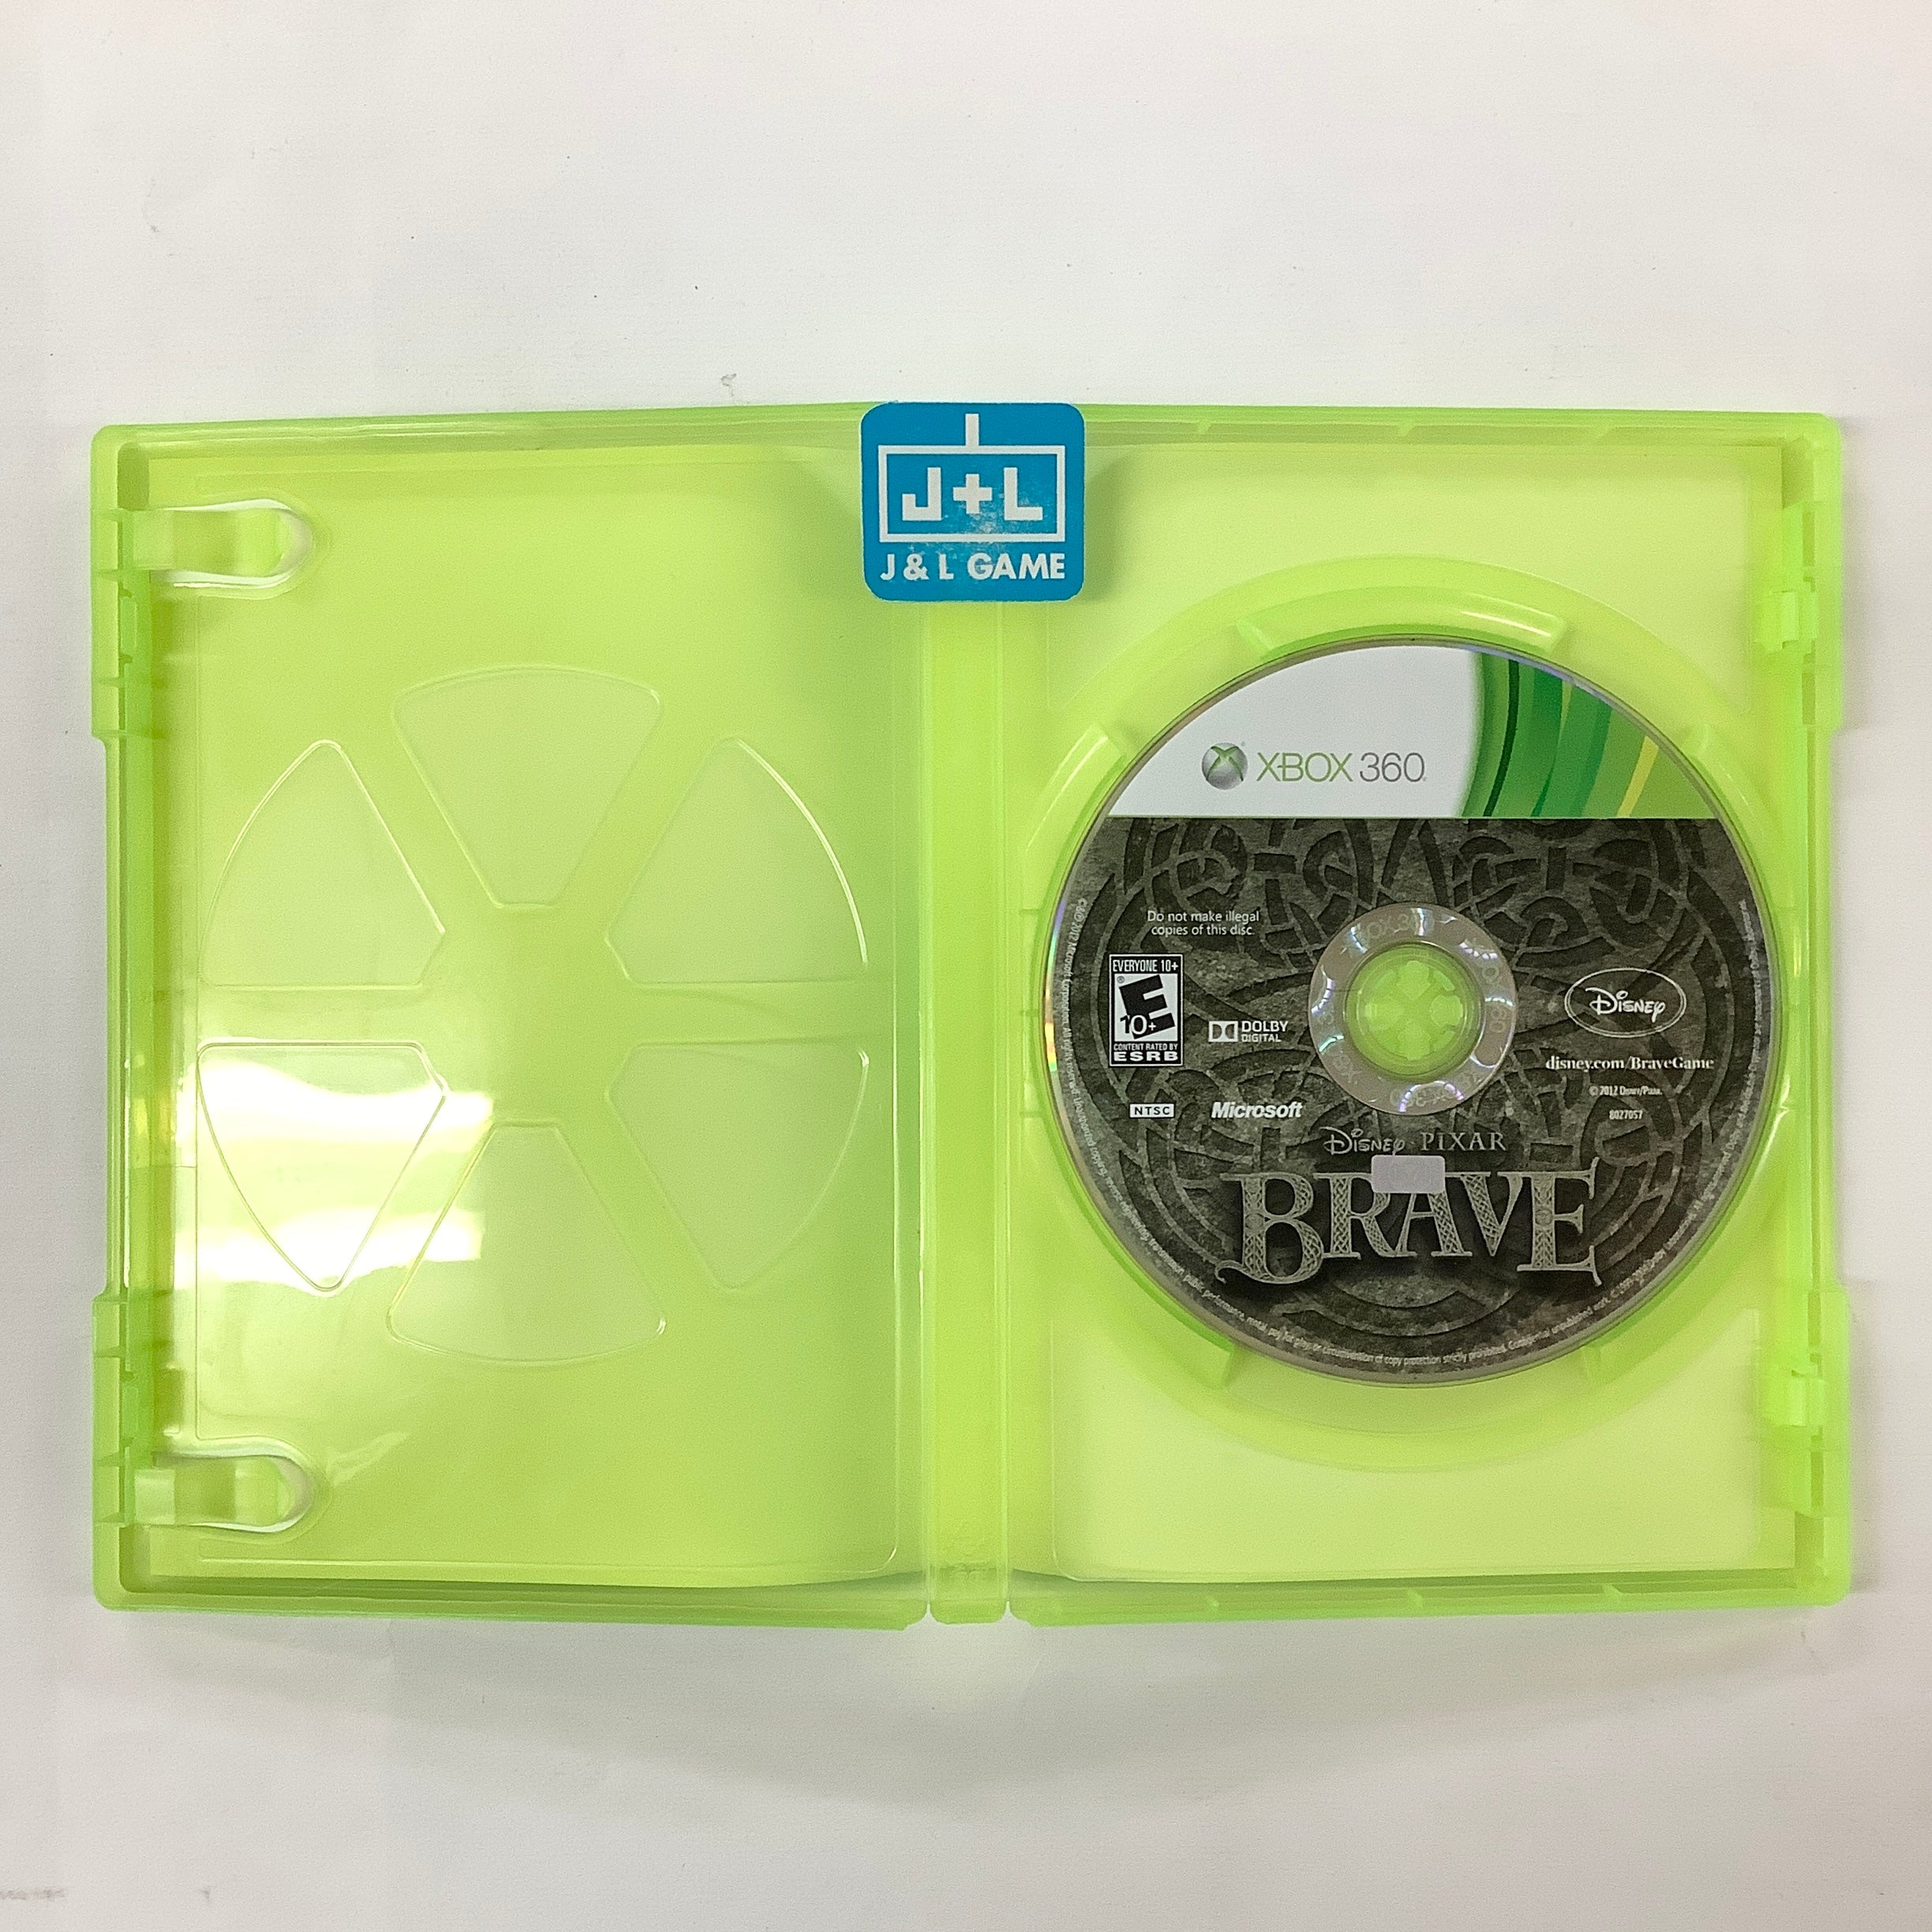 Disney Interactive Pixar Brave: The Video Game